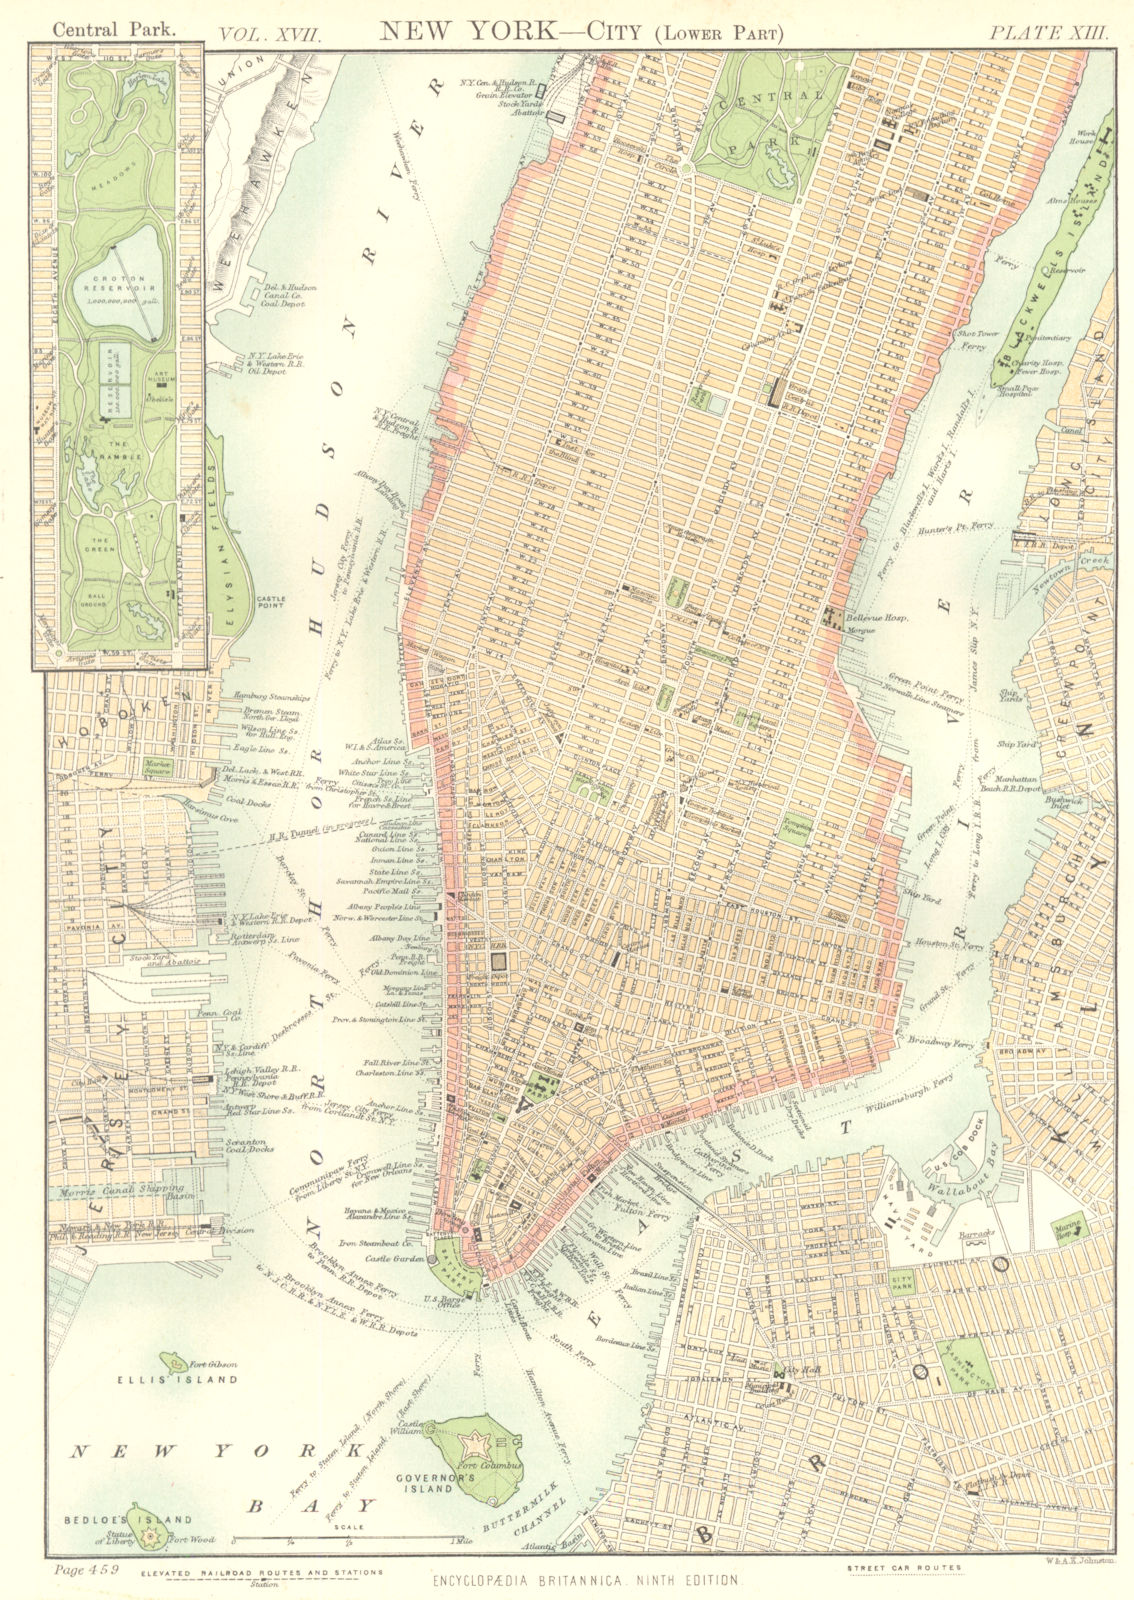 MANHATTAN. New York City Lower. Central Park. Brooklyn. Jersey City. 1898 map